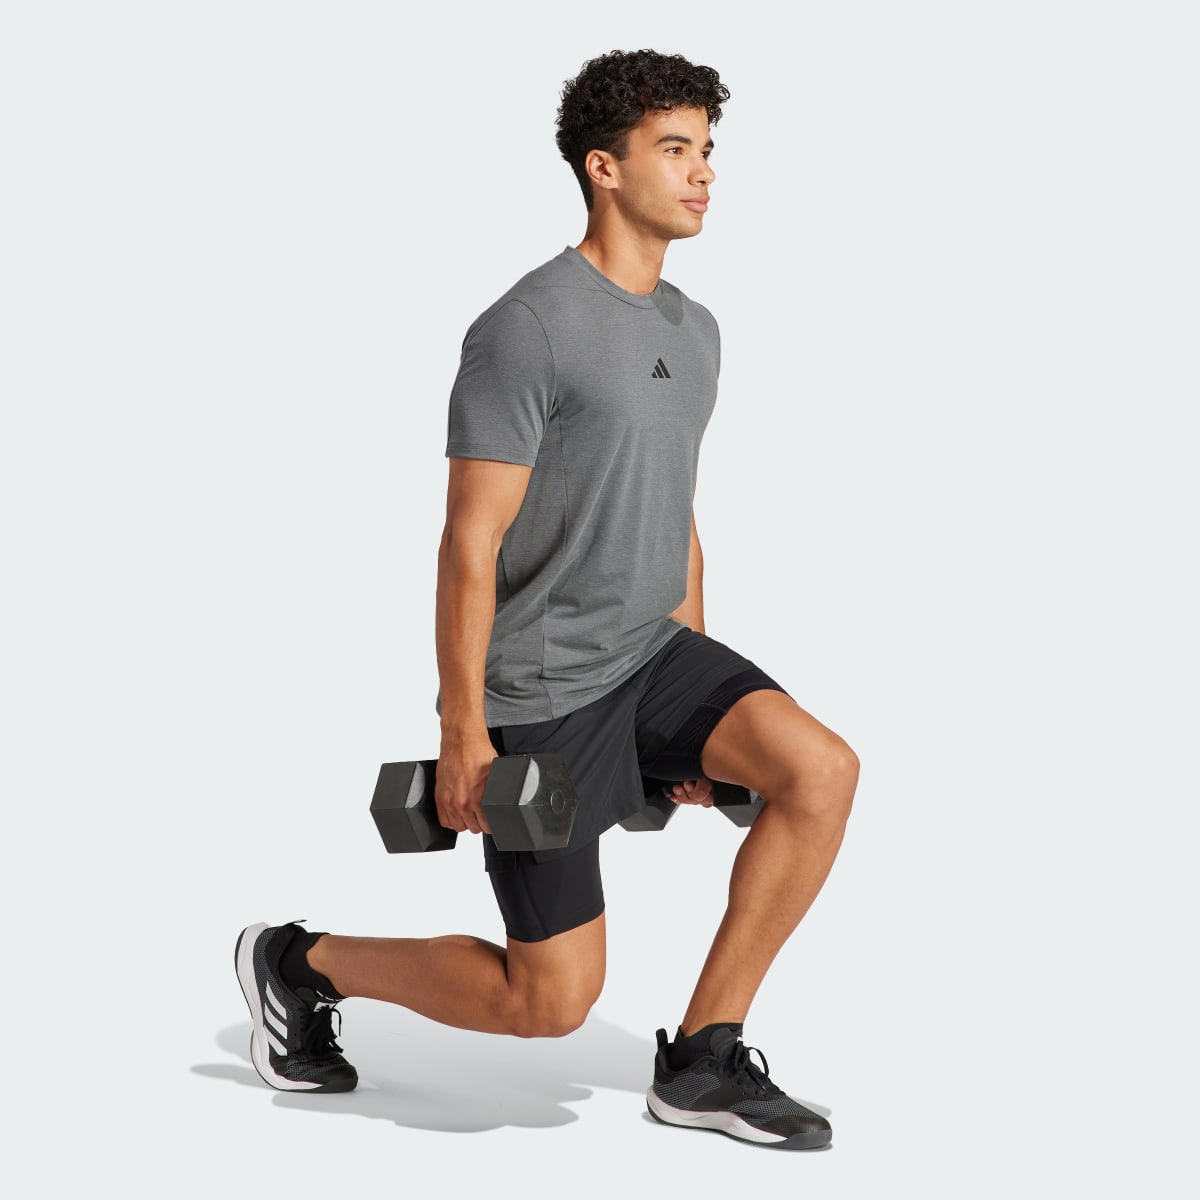 Adidas T-shirt Designed for Training Workout. 5